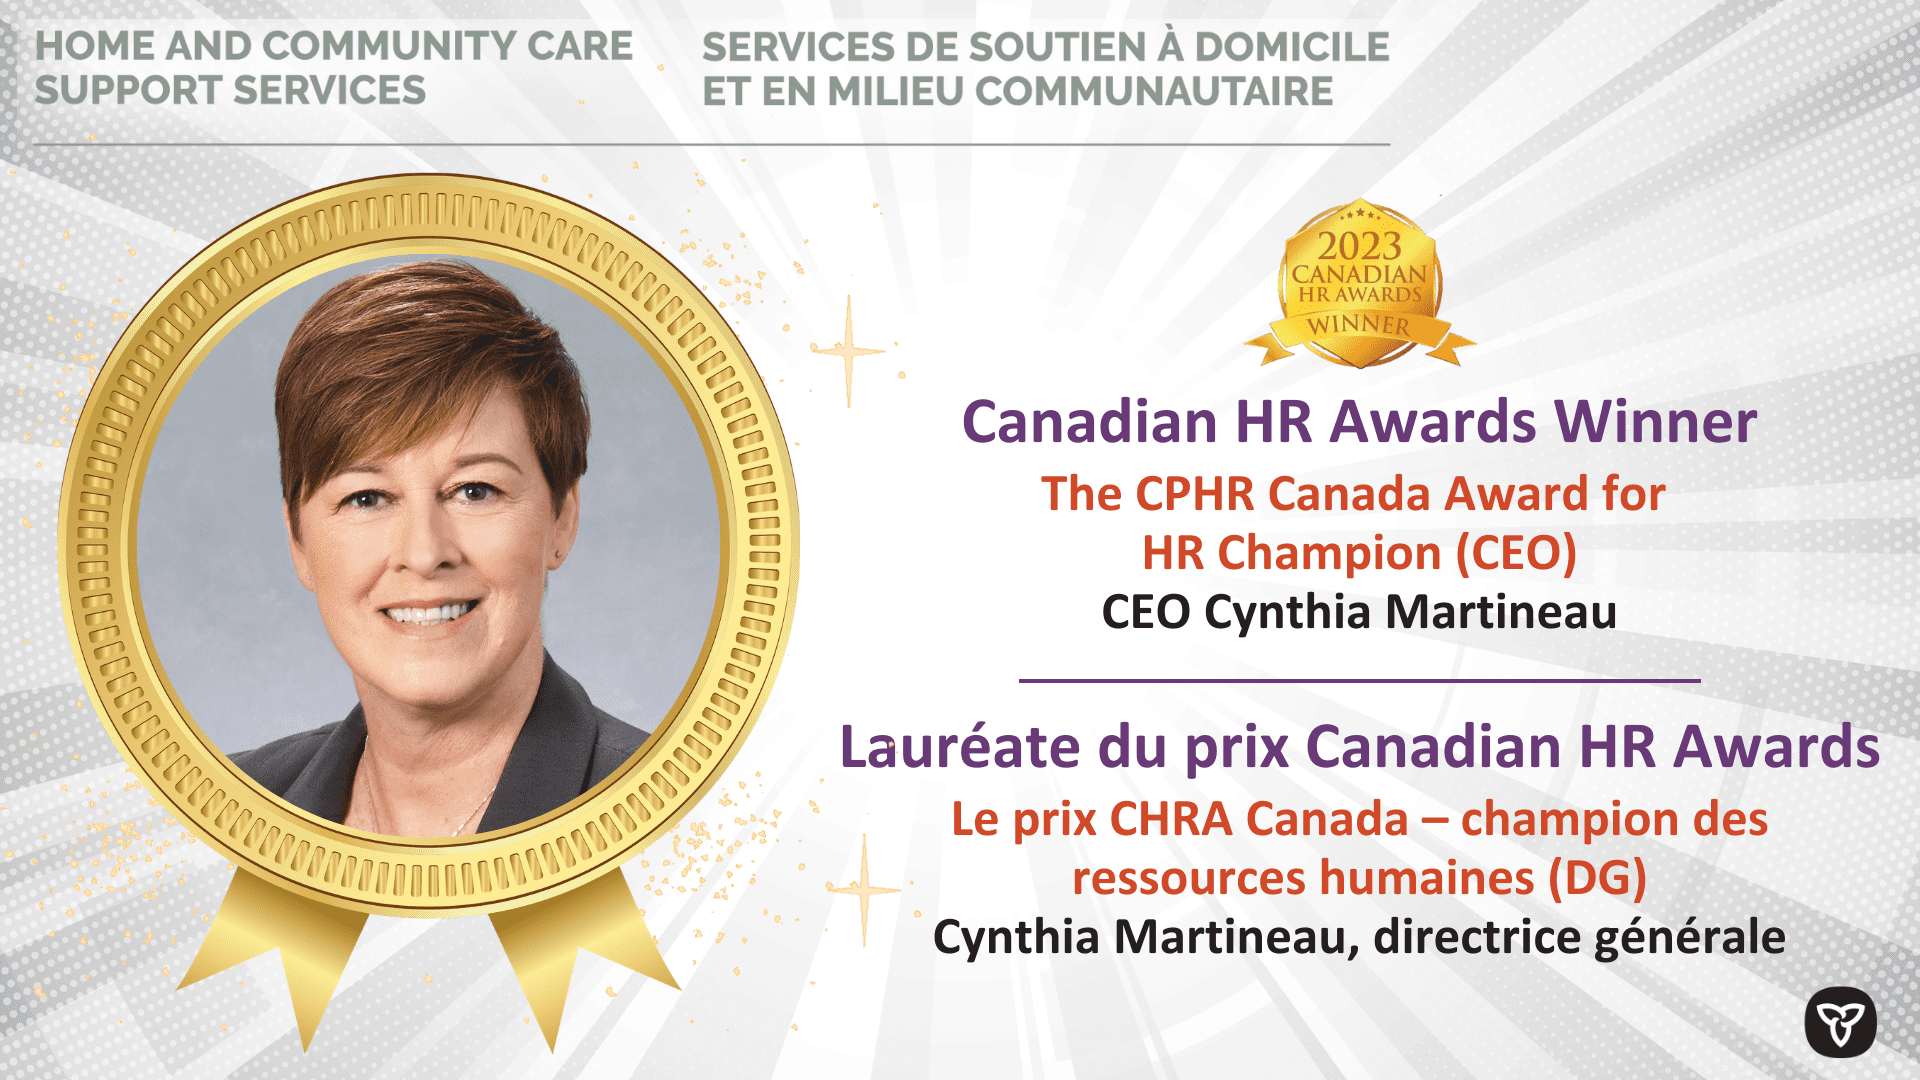 English: Canadian HR Awards Winner – The CPHR Canada Award for HR Champion (CEO) Cynthia Martineau / Français : Le Prix CRHA Canada – champion des ressources humaines (DG) Cynthia Martineau, directrice générale